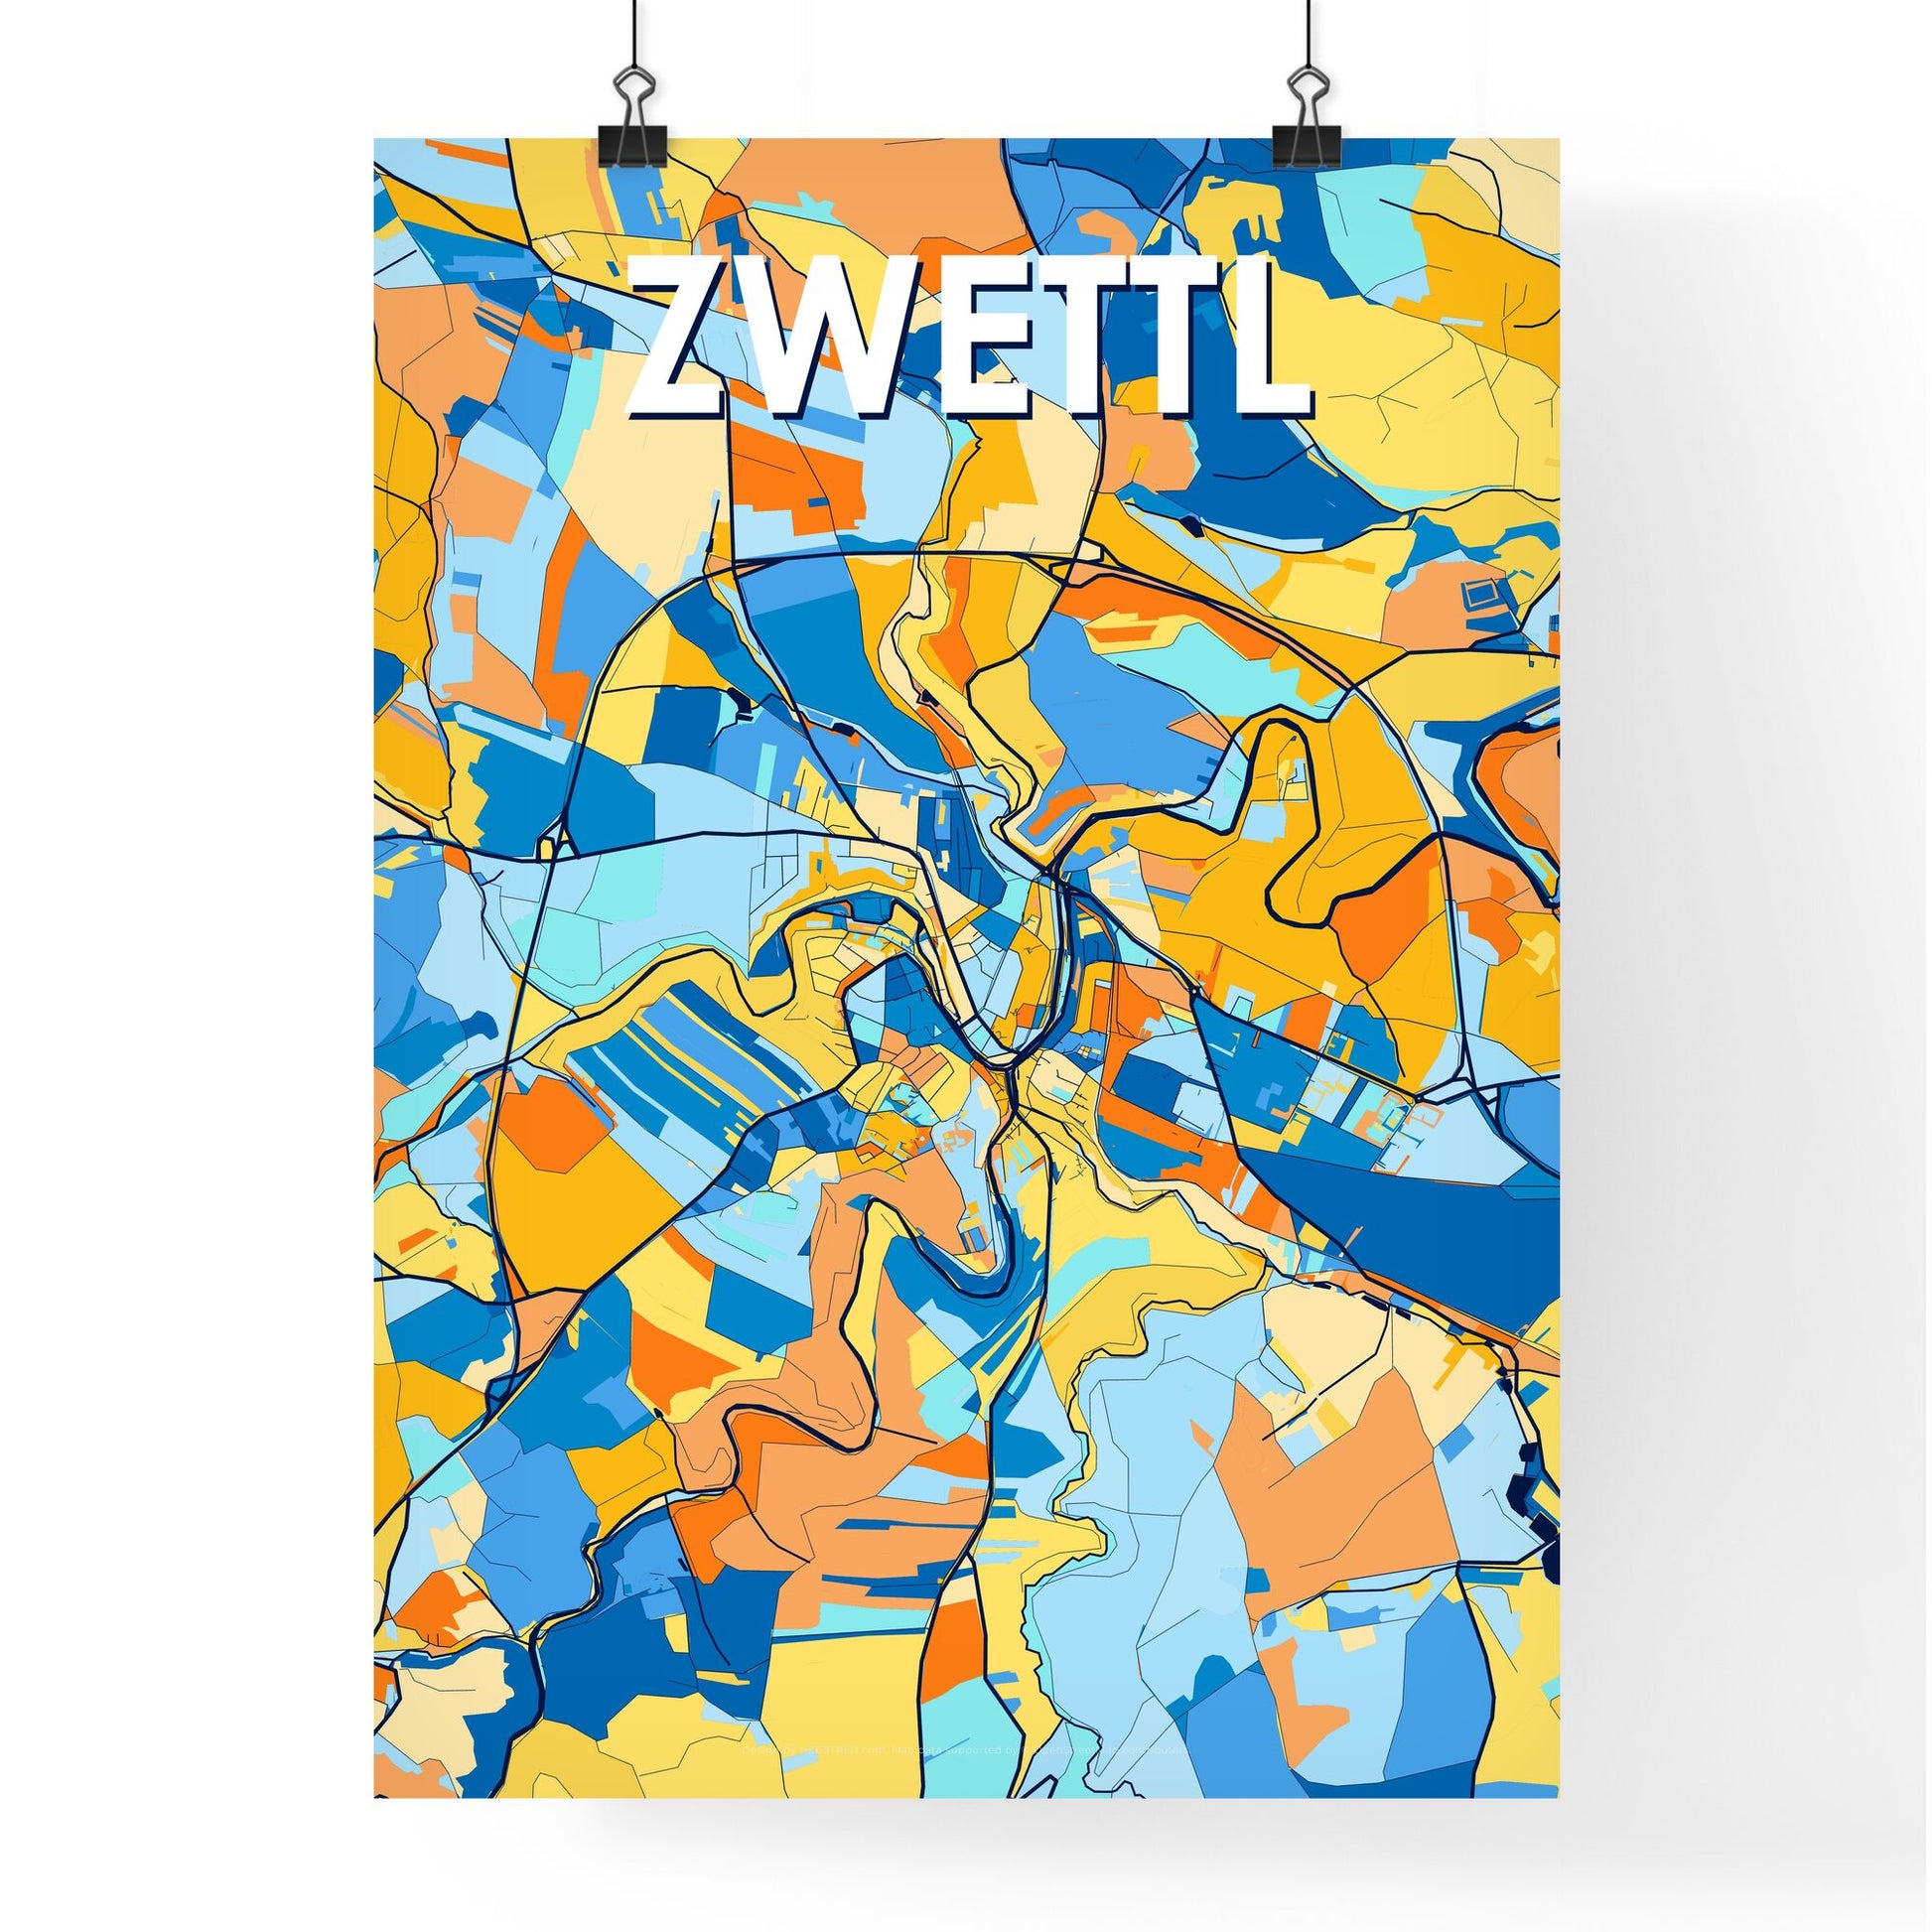 ZWETTL AUSTRIA Vibrant Colorful Art Map Poster Blue Orange